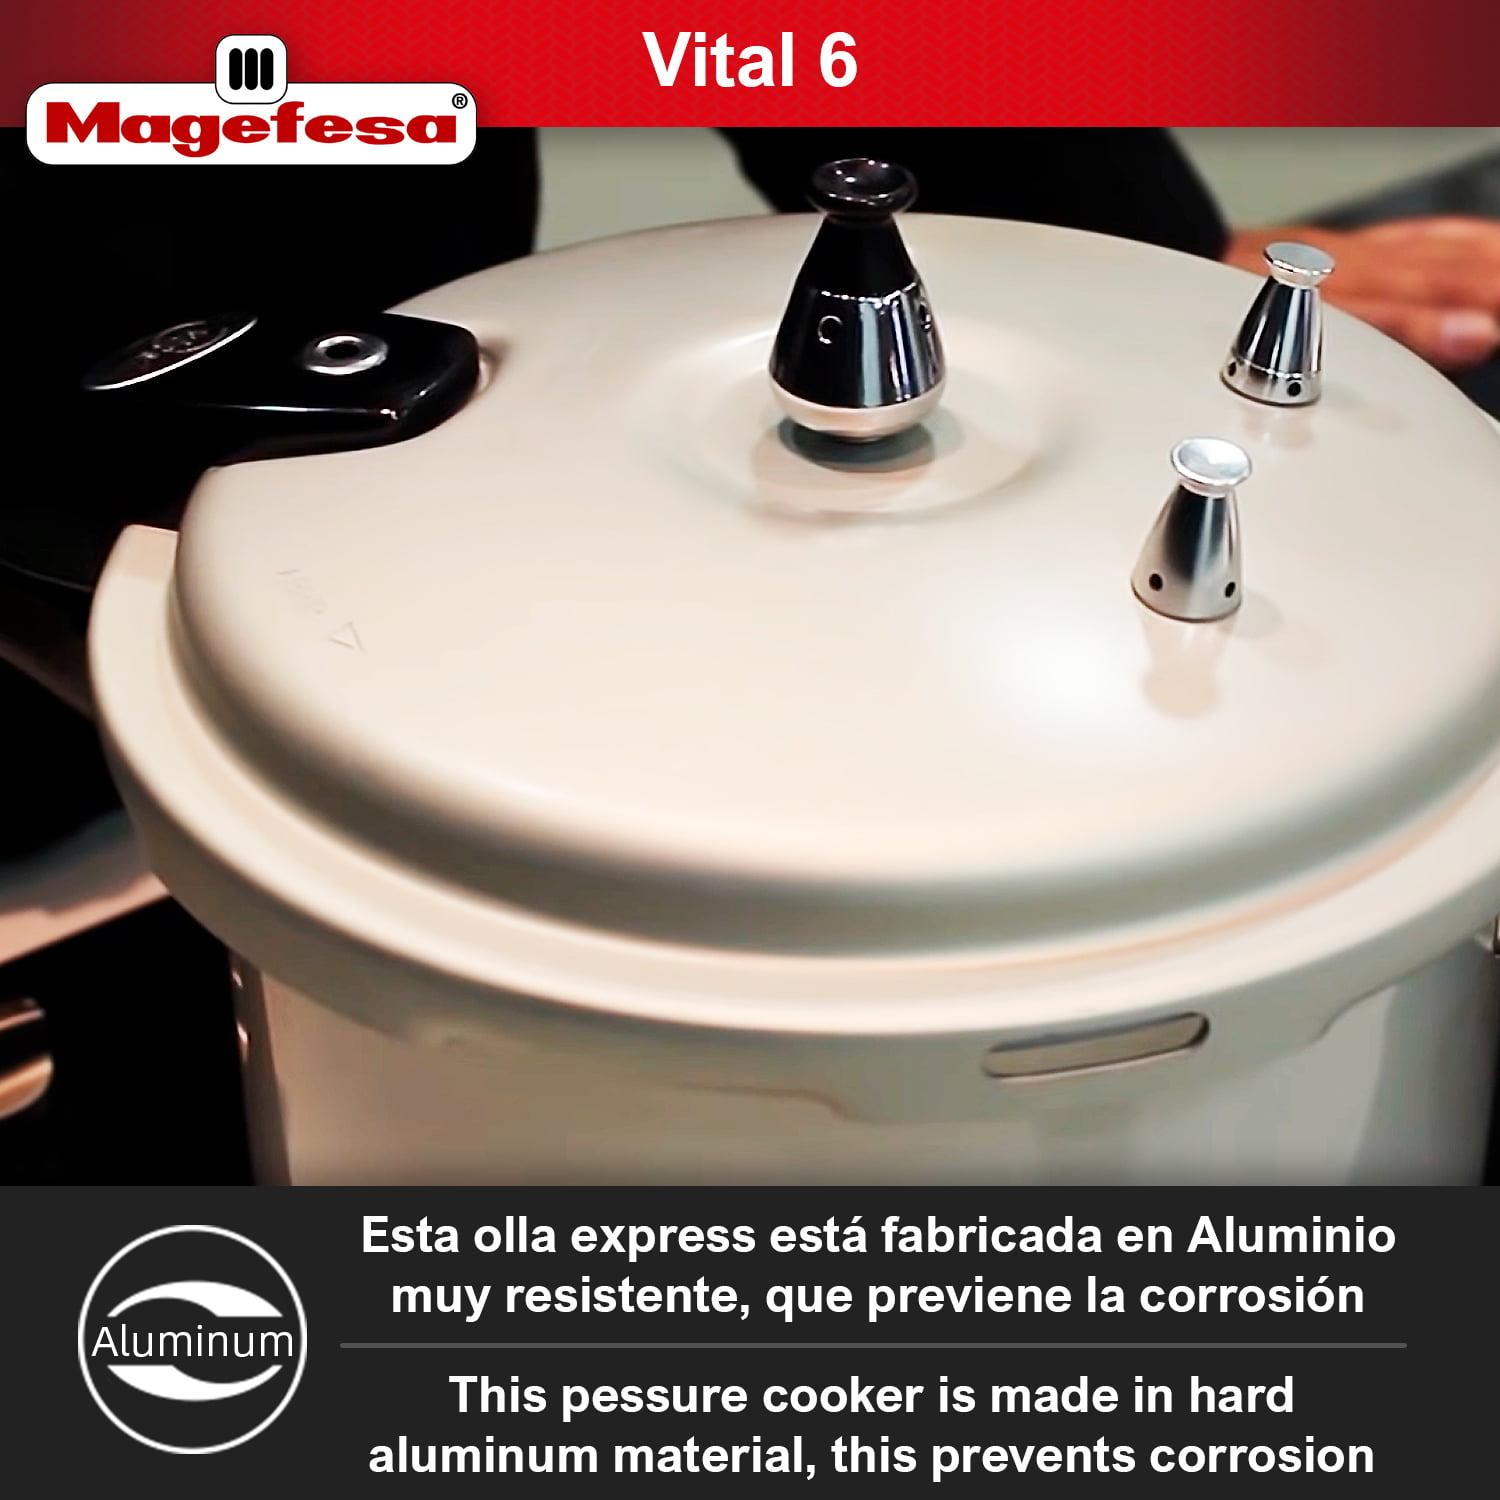 MAGEFESA ® Vital 6 Pressure Cooker, 5.3 Quart, made of very